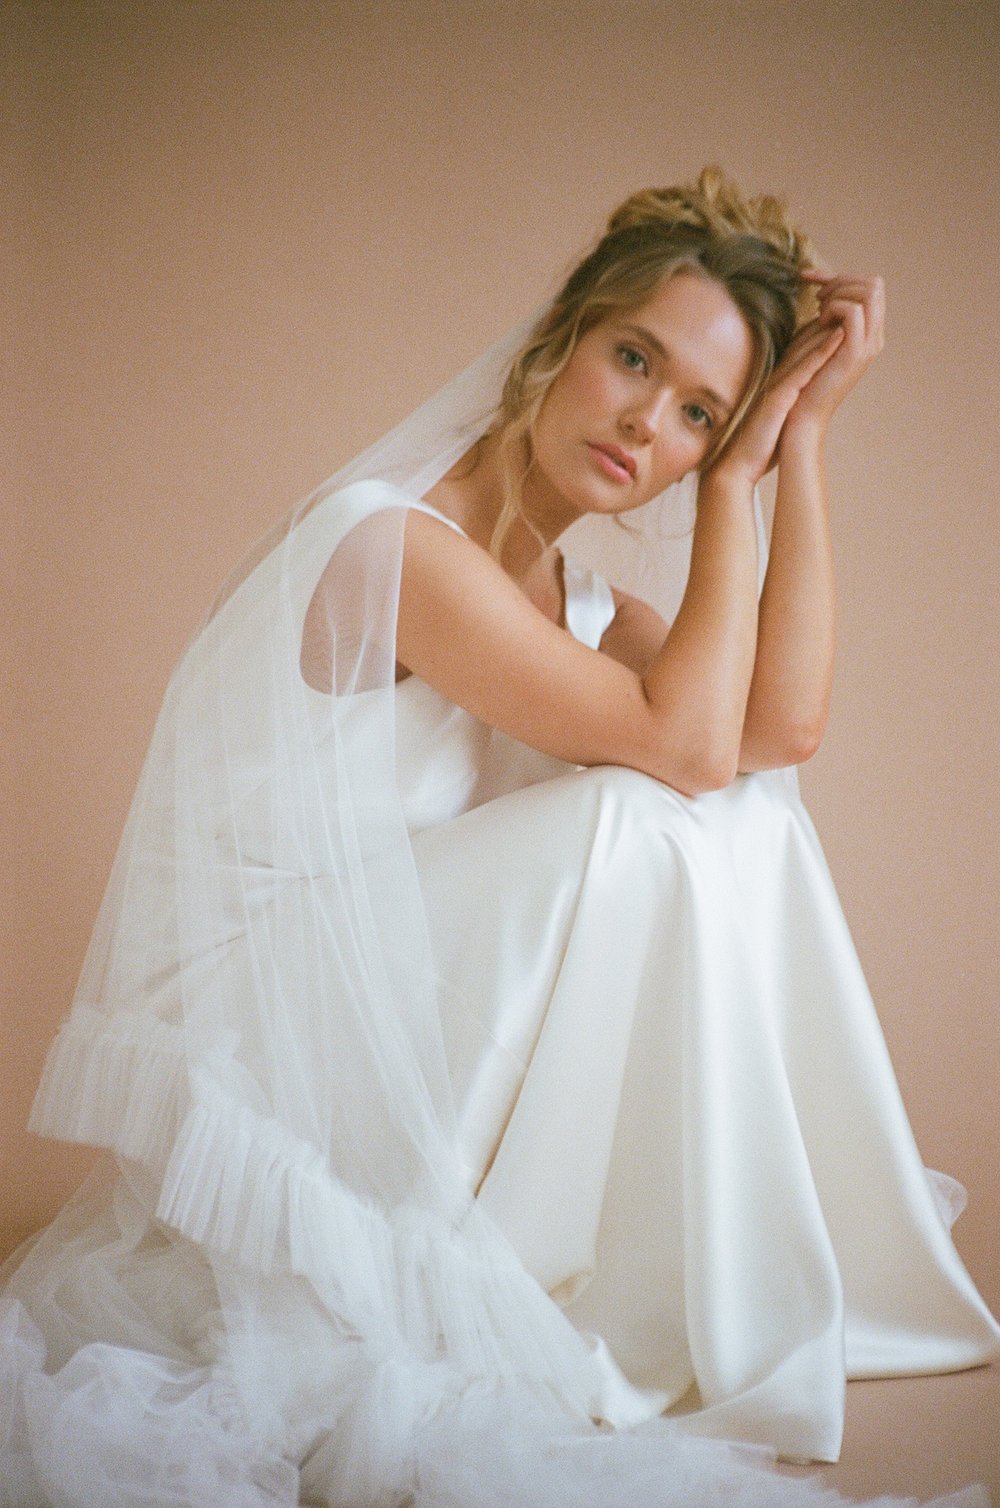 Analogue-shoot-Hollie-Cornish-photographer-Kate-Beaumont-wedding-gowns-Sheffield-33.jpg